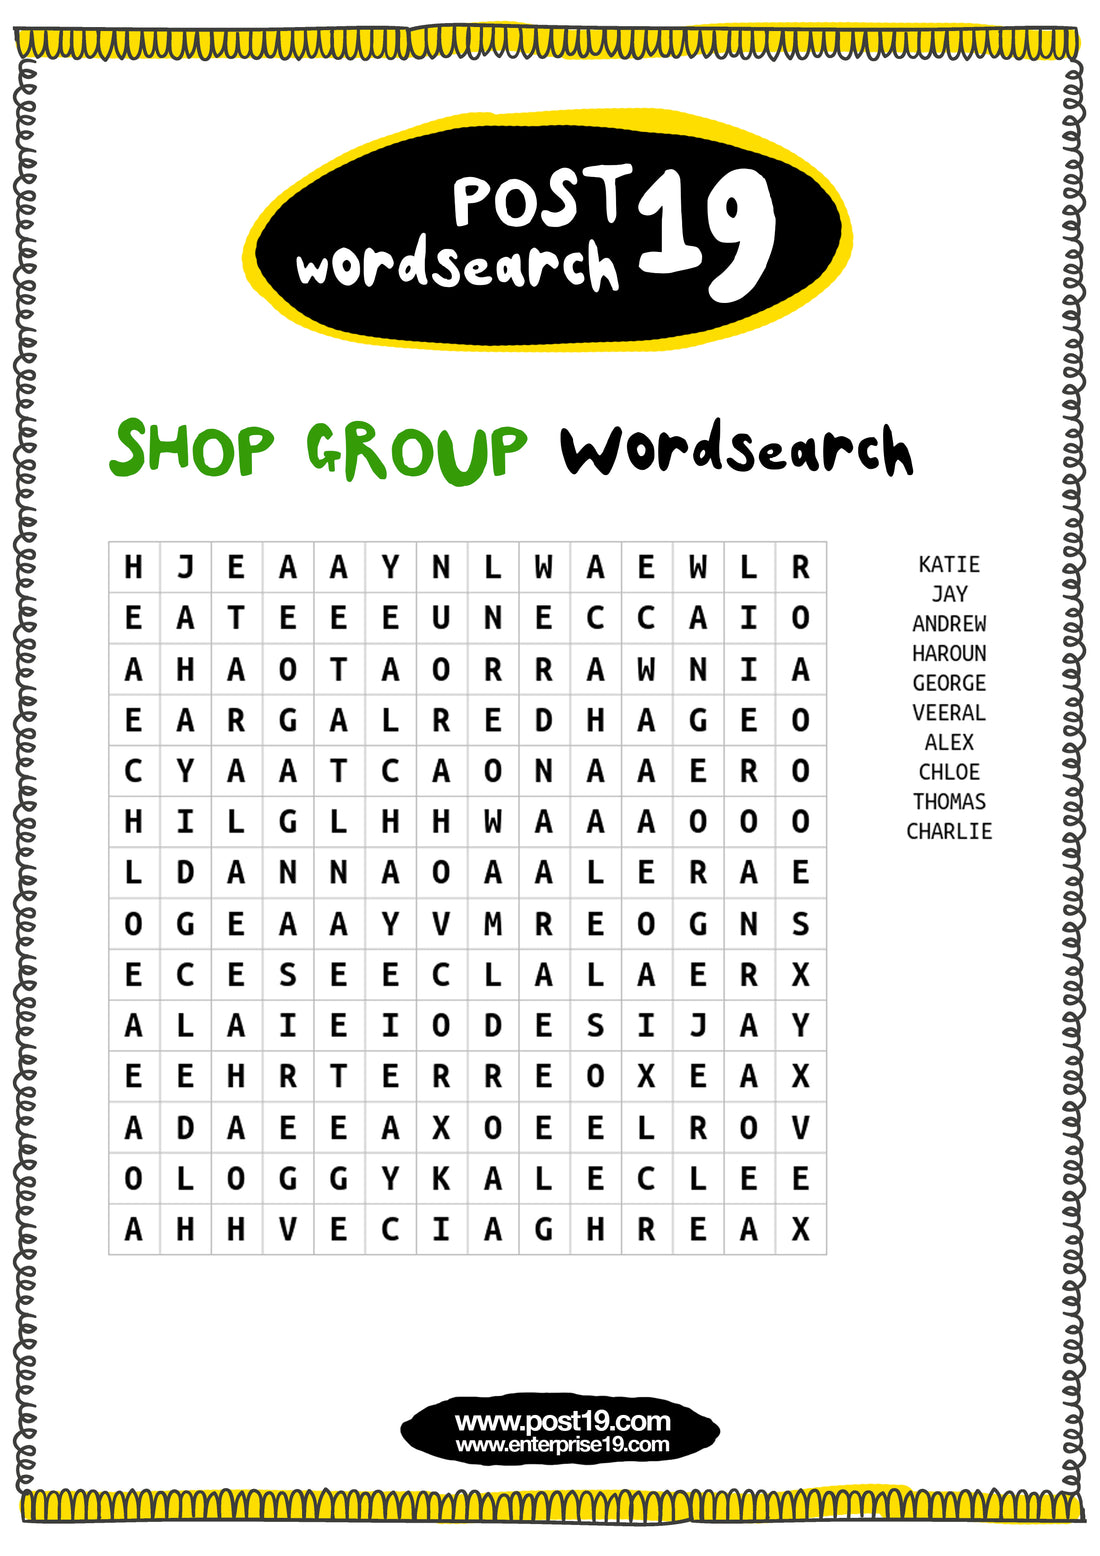 Shop Group Wordsearch